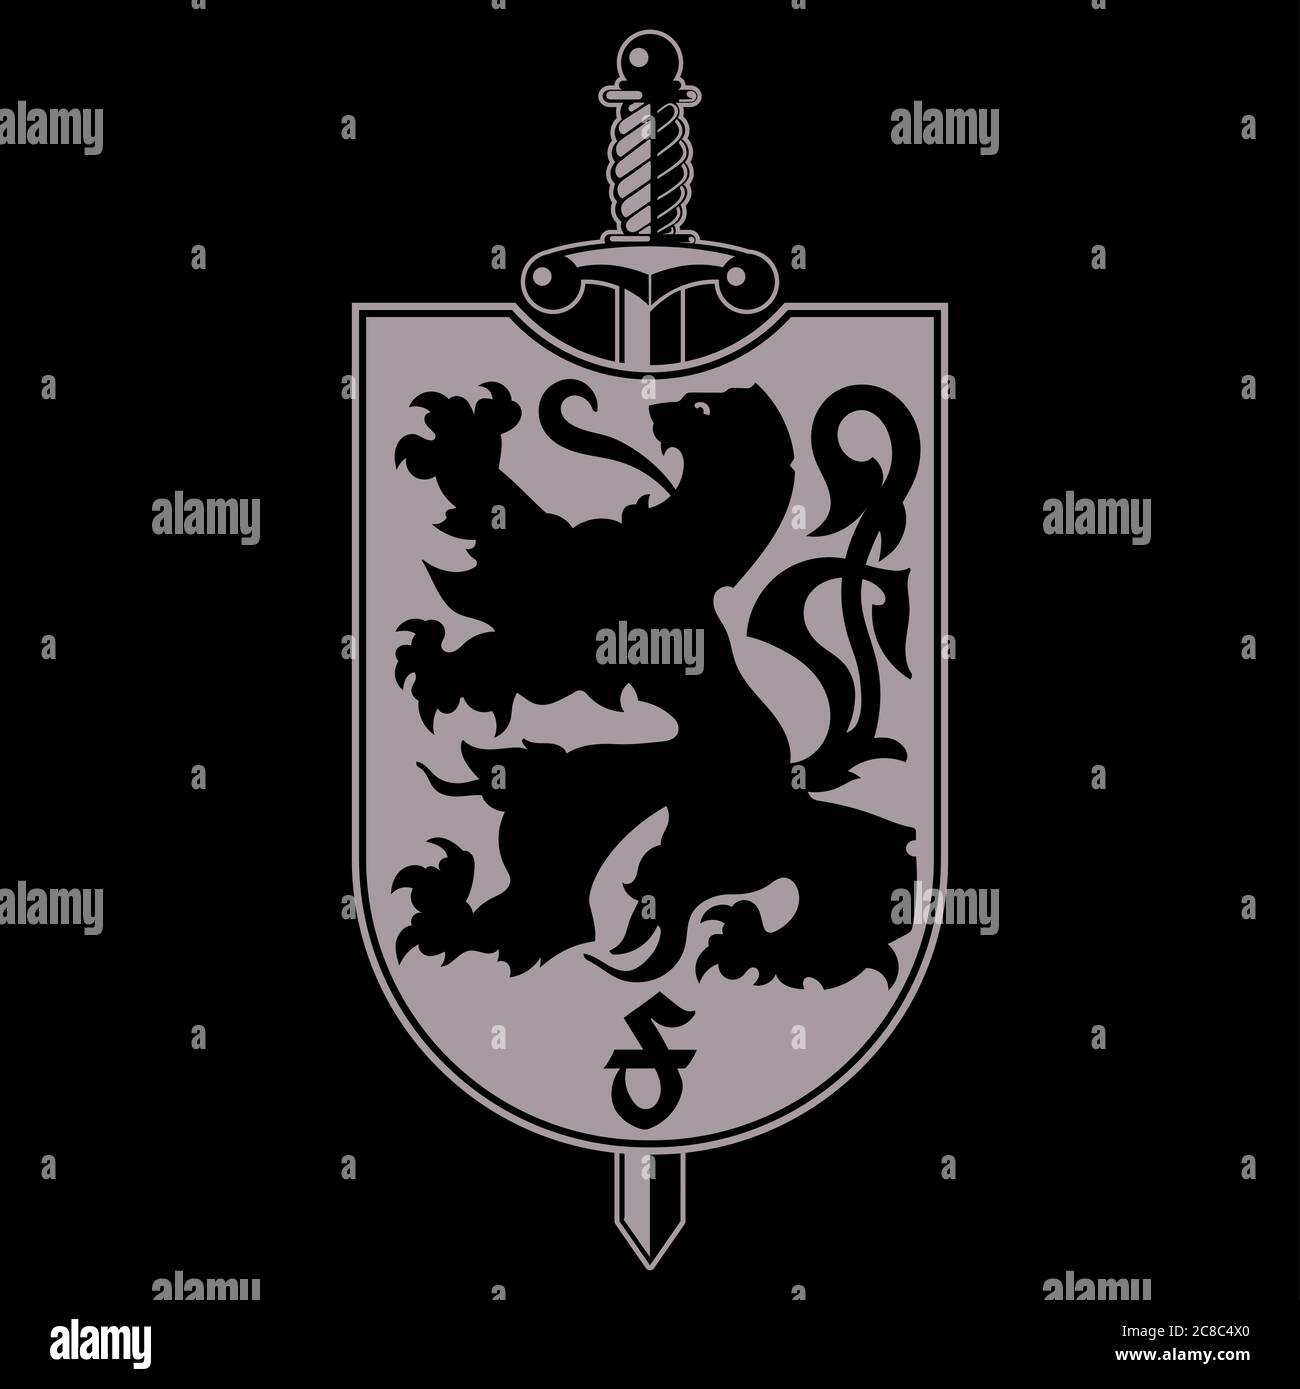 Escudo heráldico de armas. Silueta de león heráldico, escudo heráldico con un león y espada Ilustración del Vector